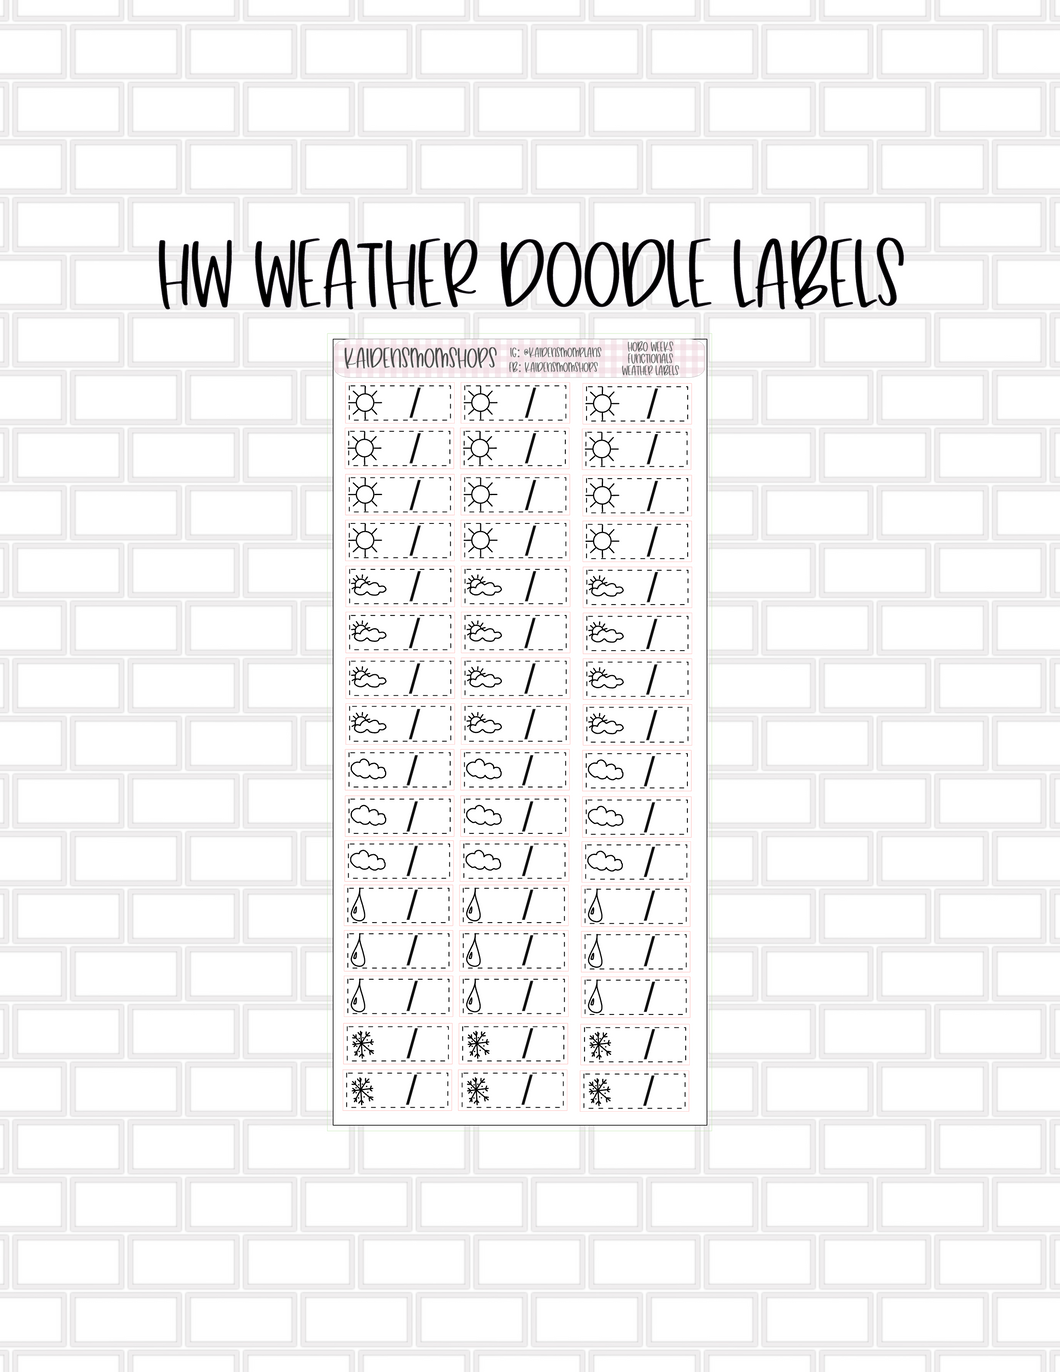 Hobonichi Weeks Weather doodle labels